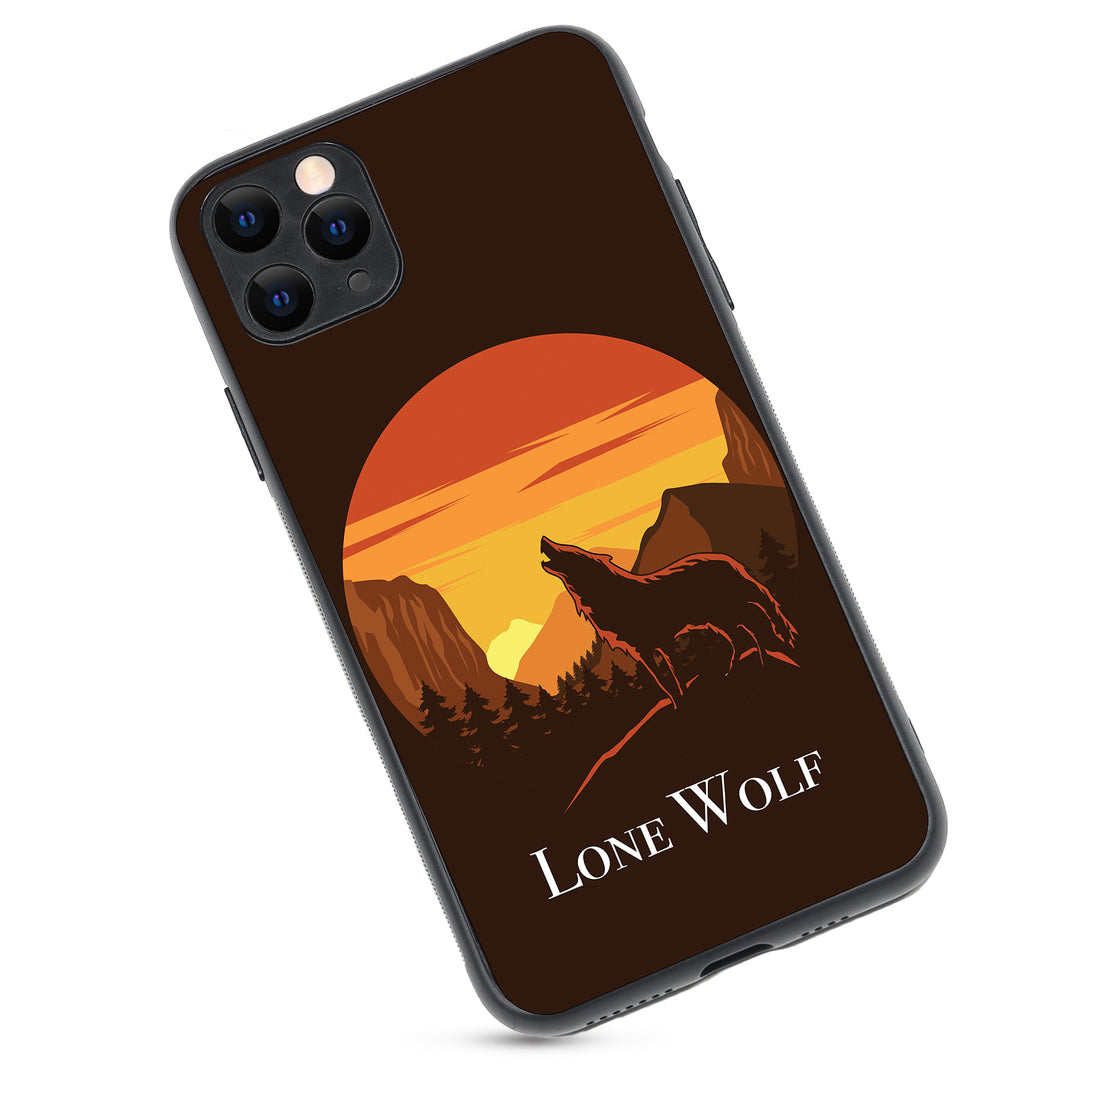 Lone Wolf Cartoon iPhone 11 Pro Max Case